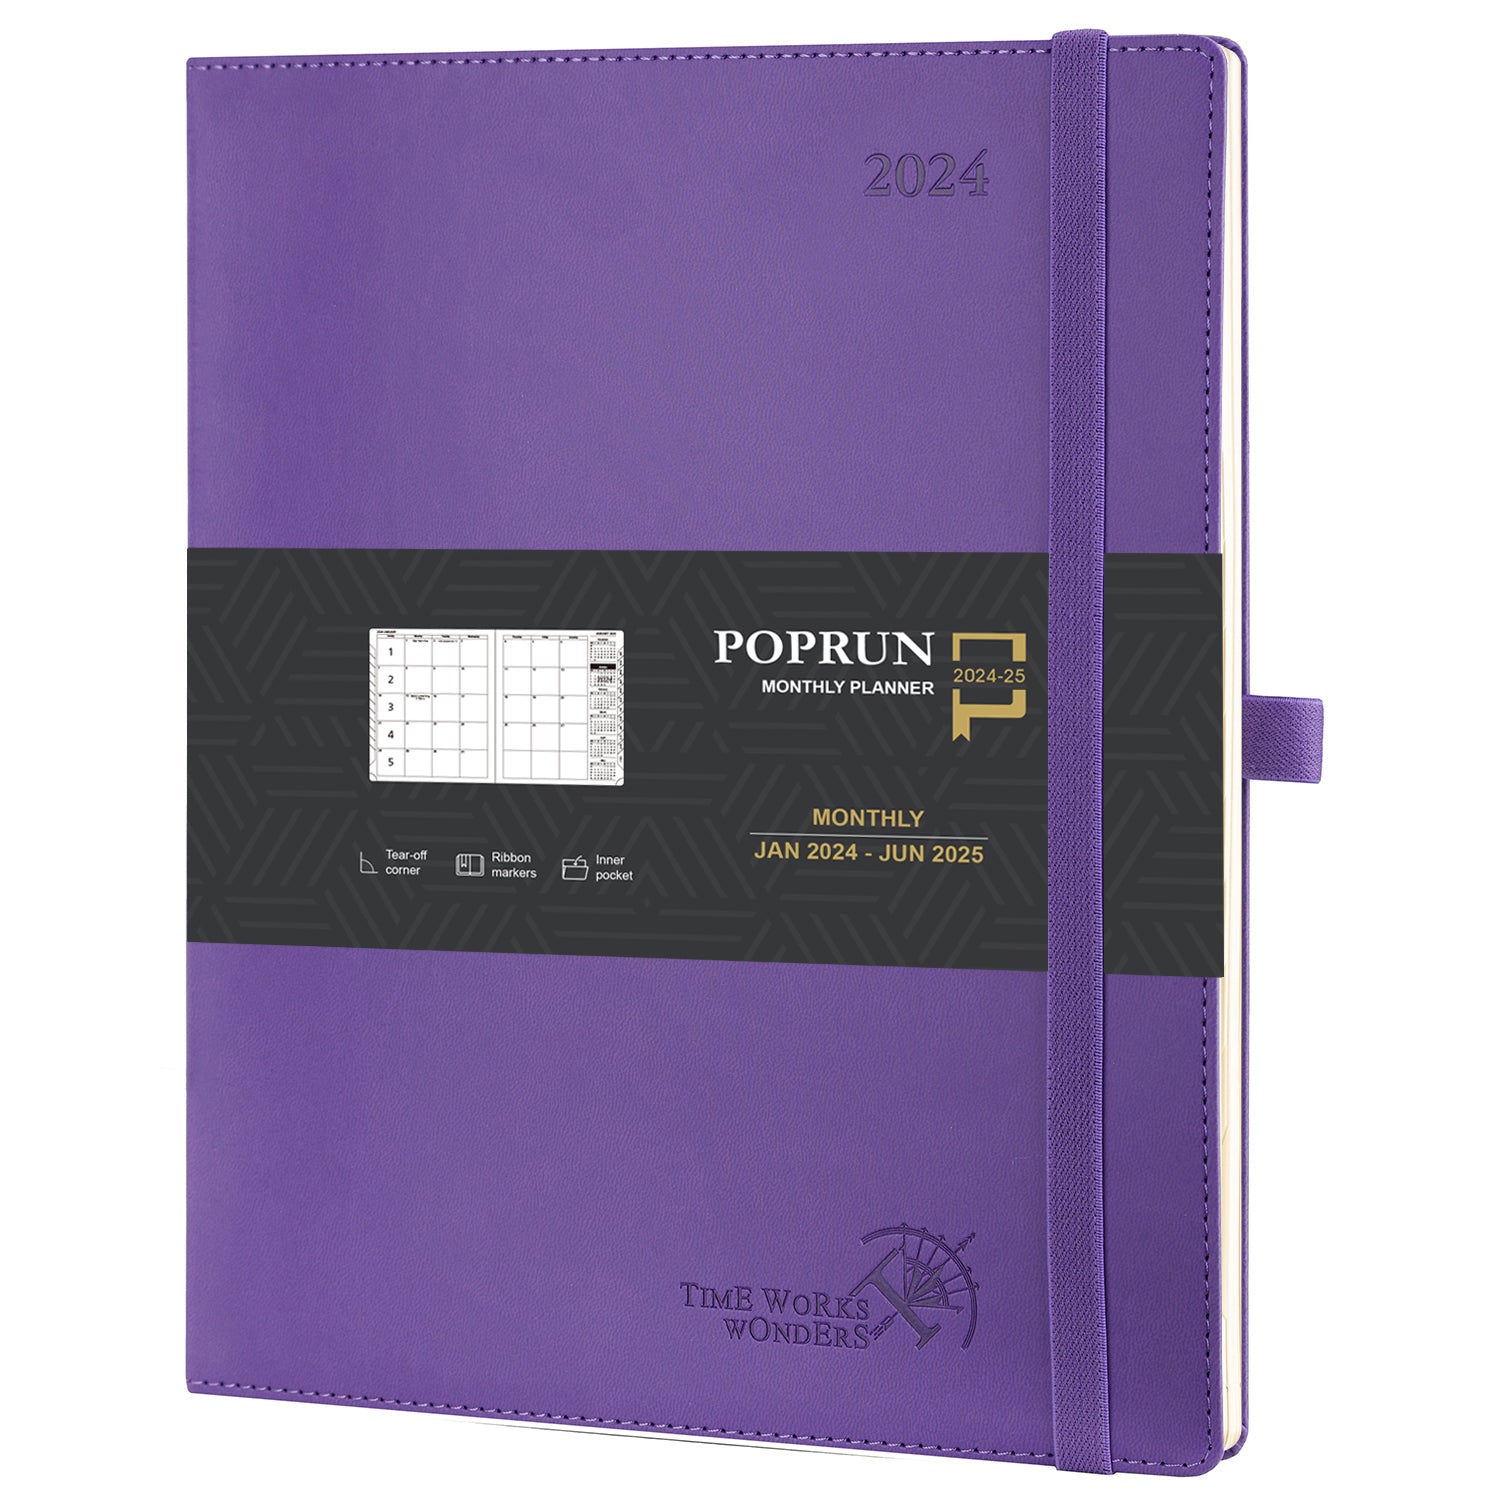 POPRUN 2024 Weekly Planner Purple